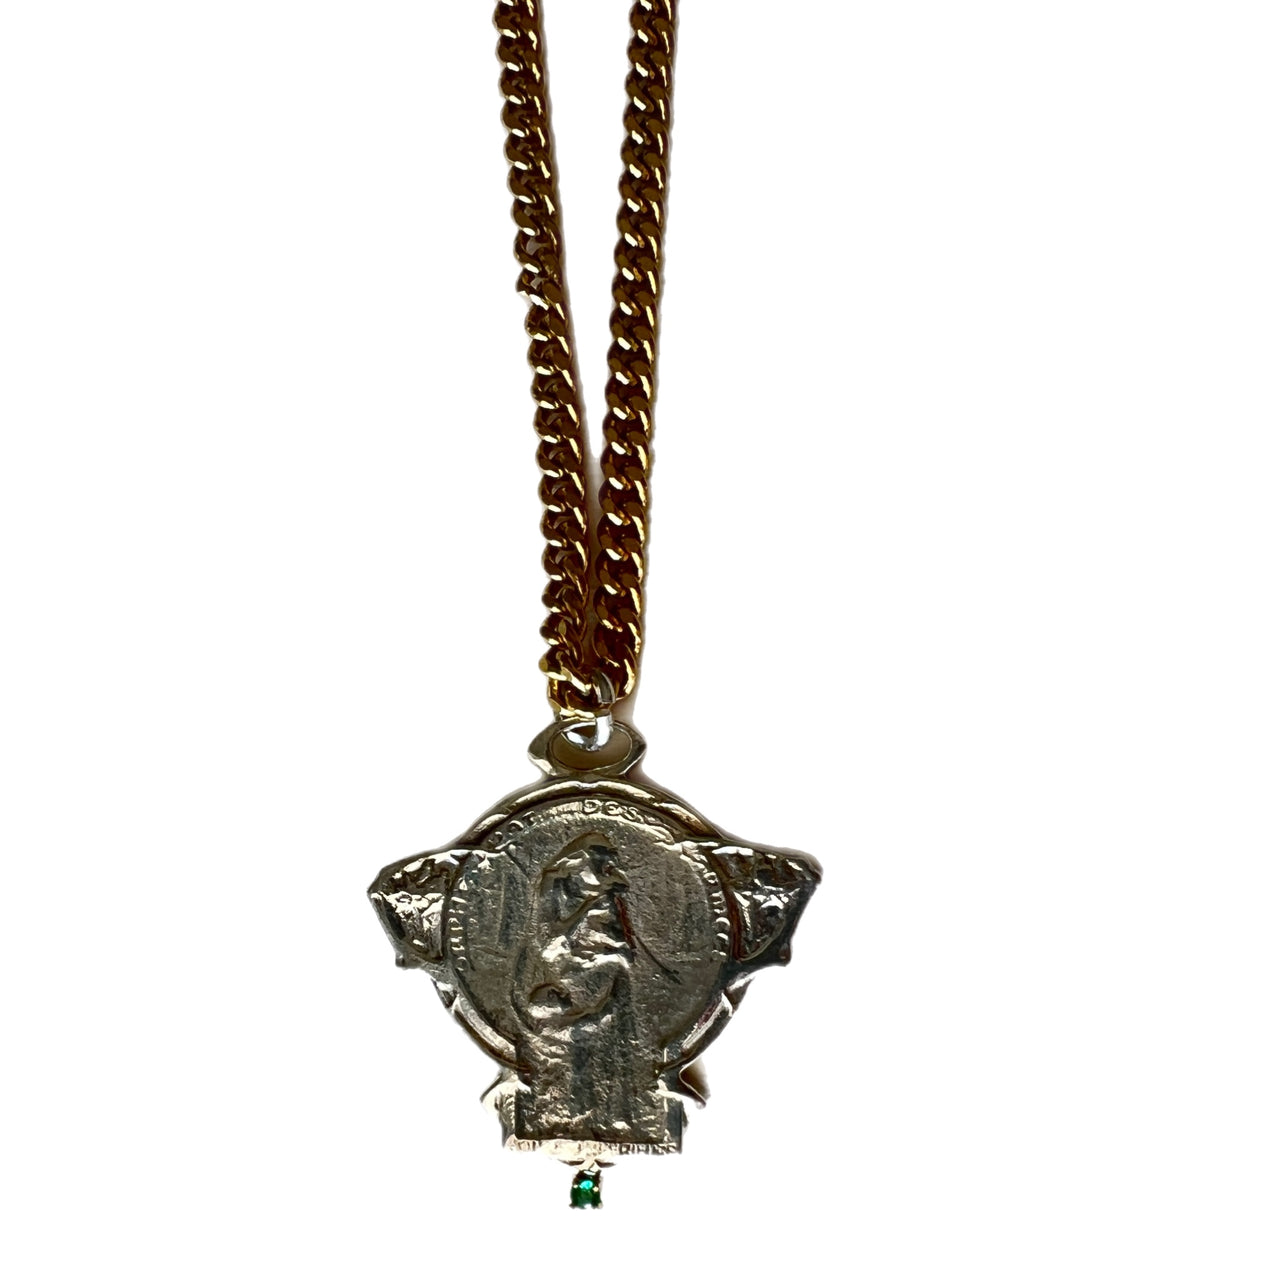 Emerald Set Art Nouveau Medal in Silver Necklace